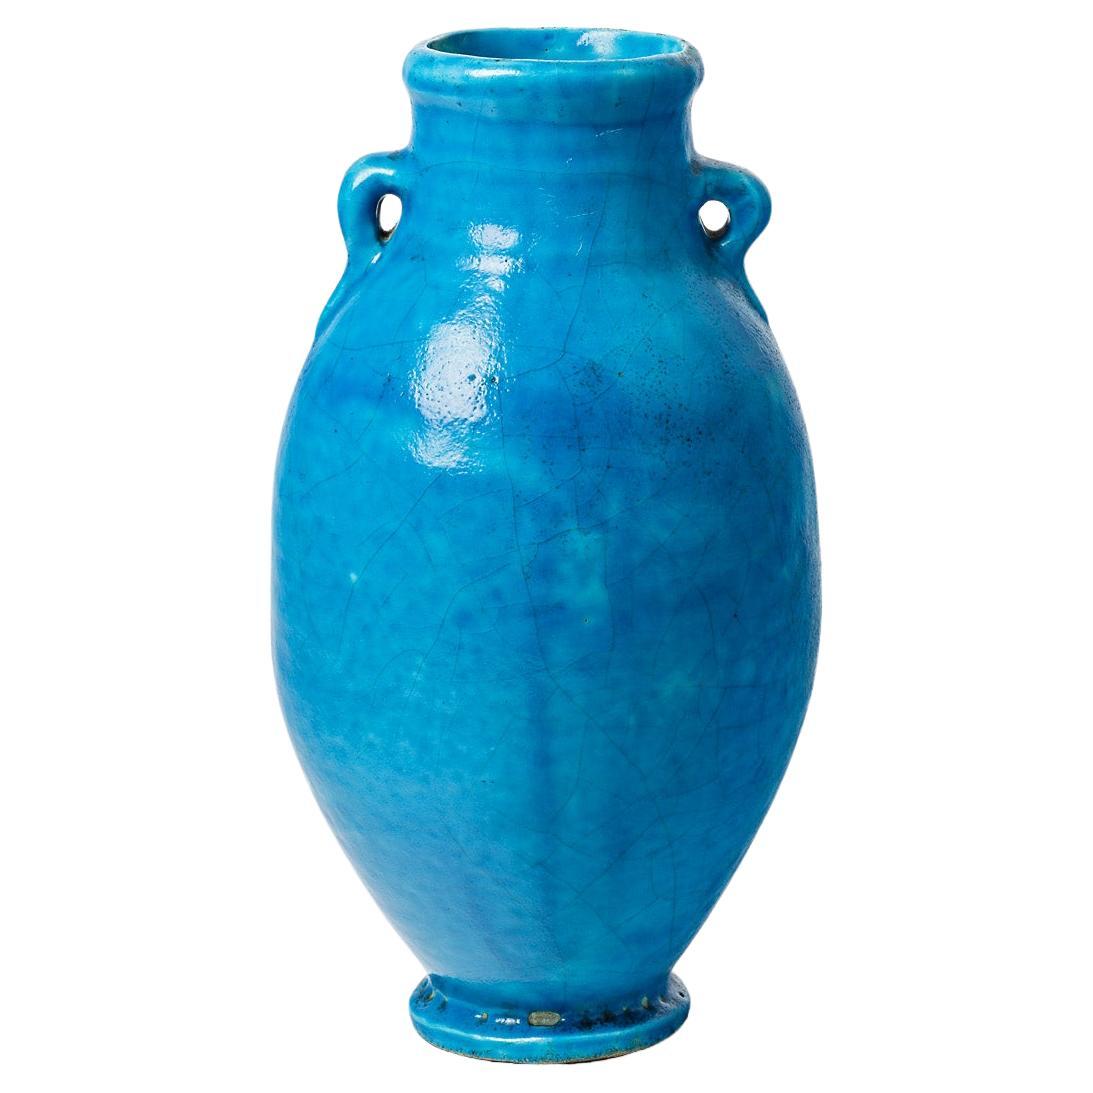 Jarrón de cerámica vidriada azul atribuido a Raoul Lachenal, hacia 1930.